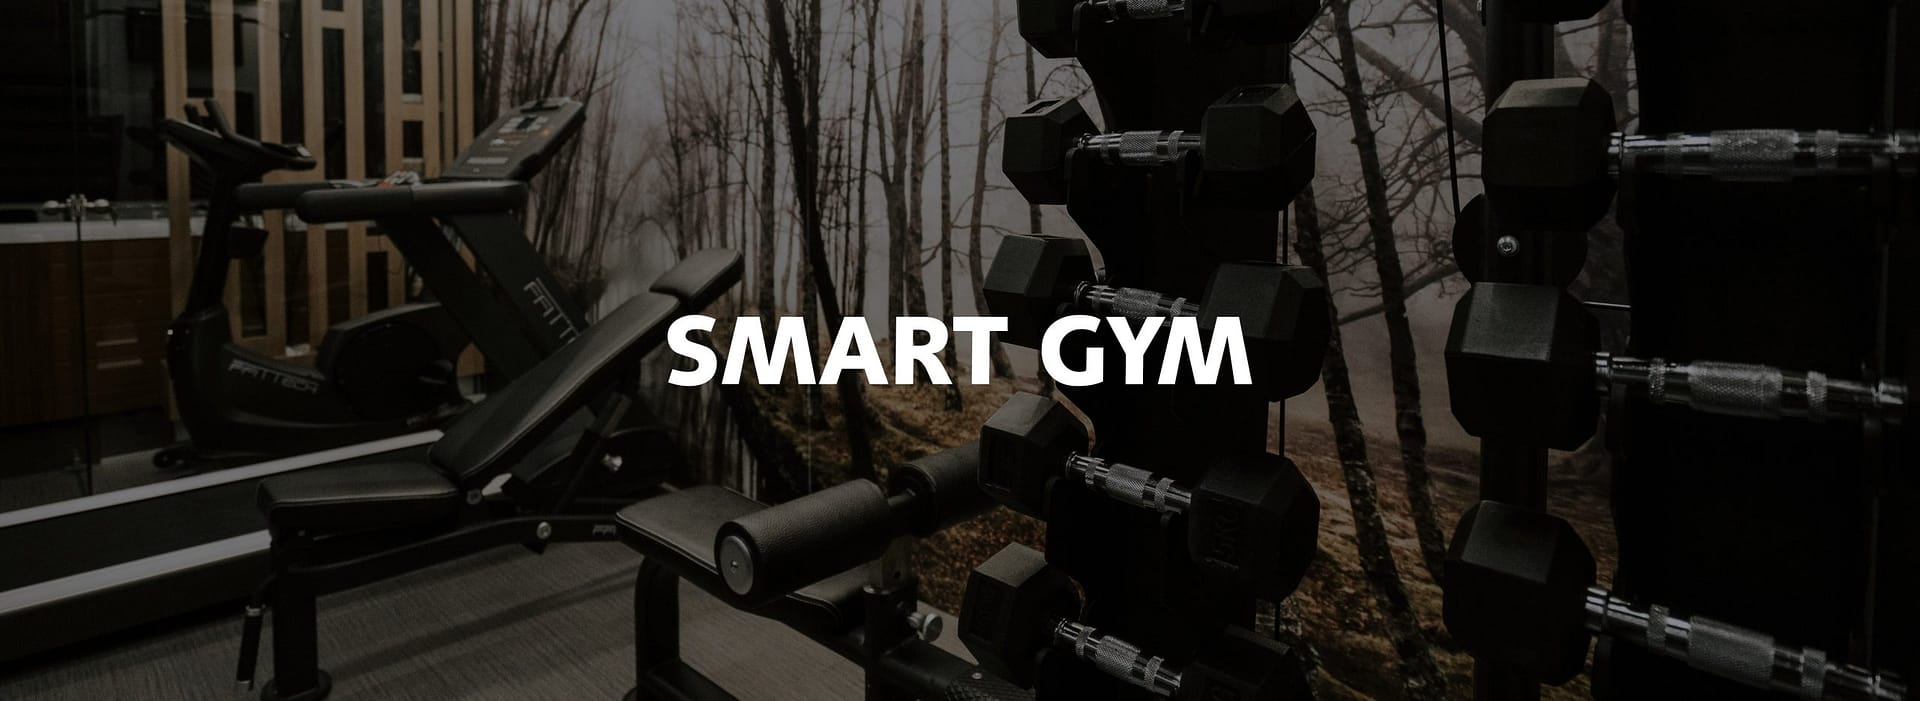 Smart Gym-min